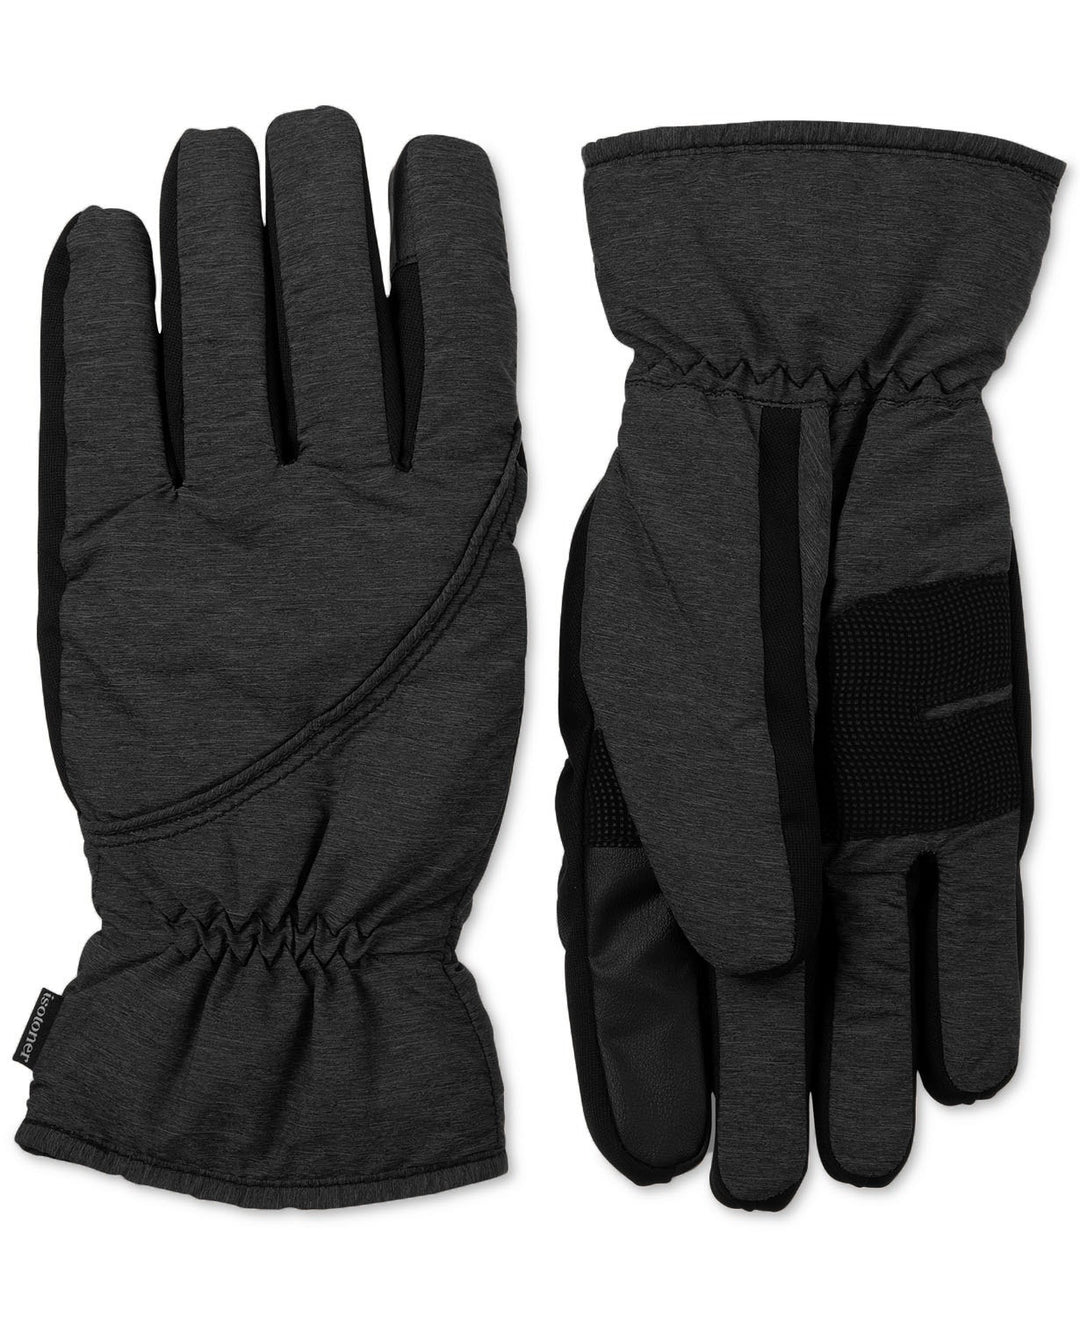 Isotoner Signature Men's Sleek Heat Waterproof Gloves Black Size Extra Large